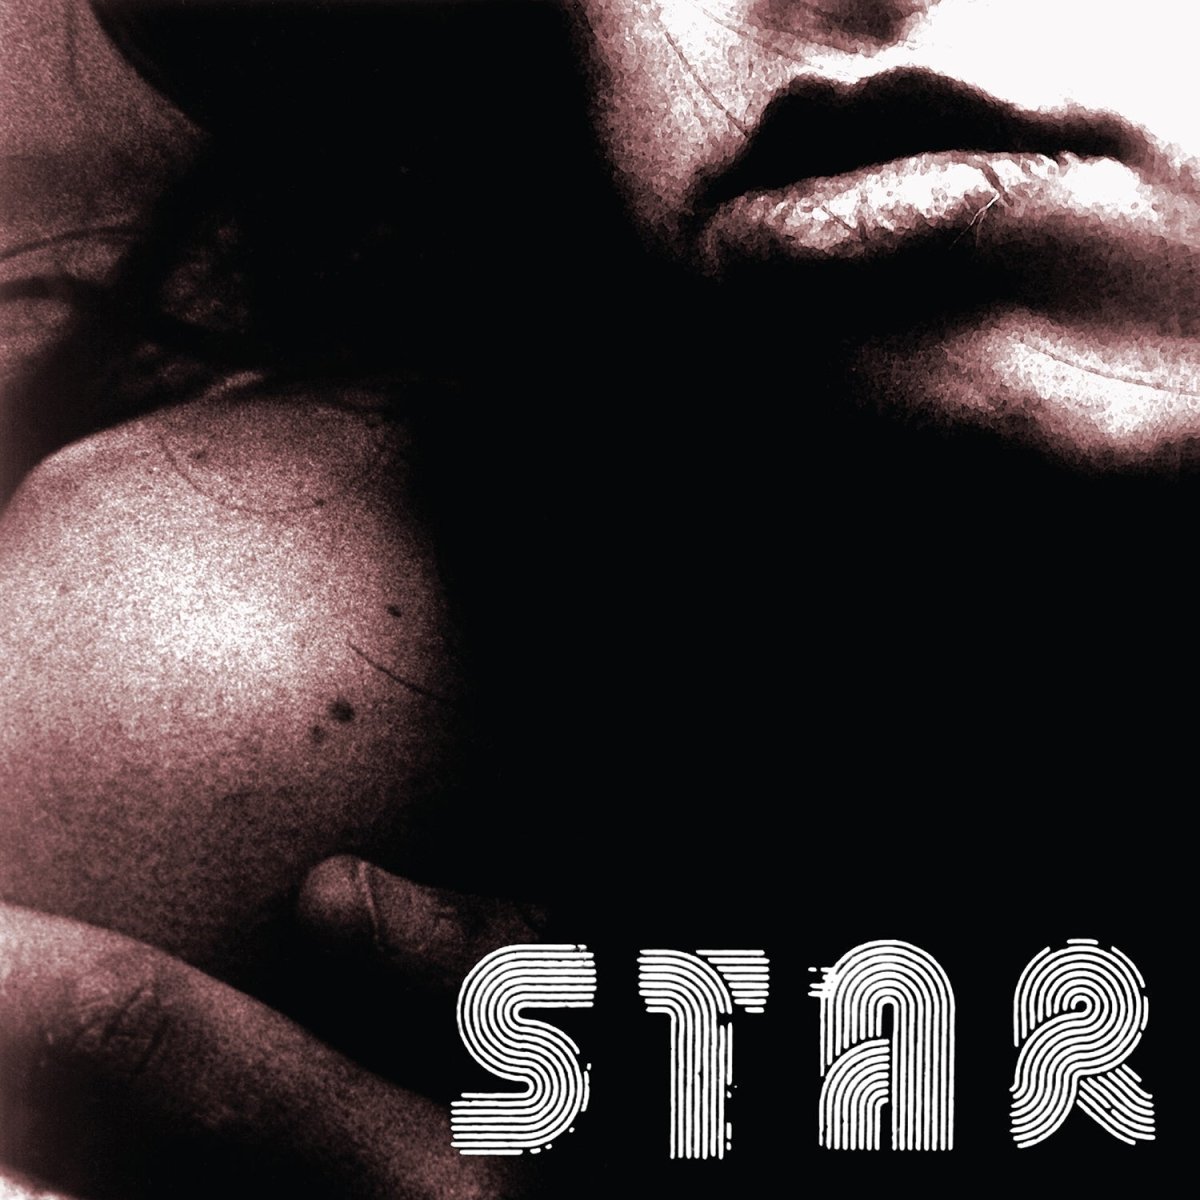 STAR - Devastator Music CDs Vinyl